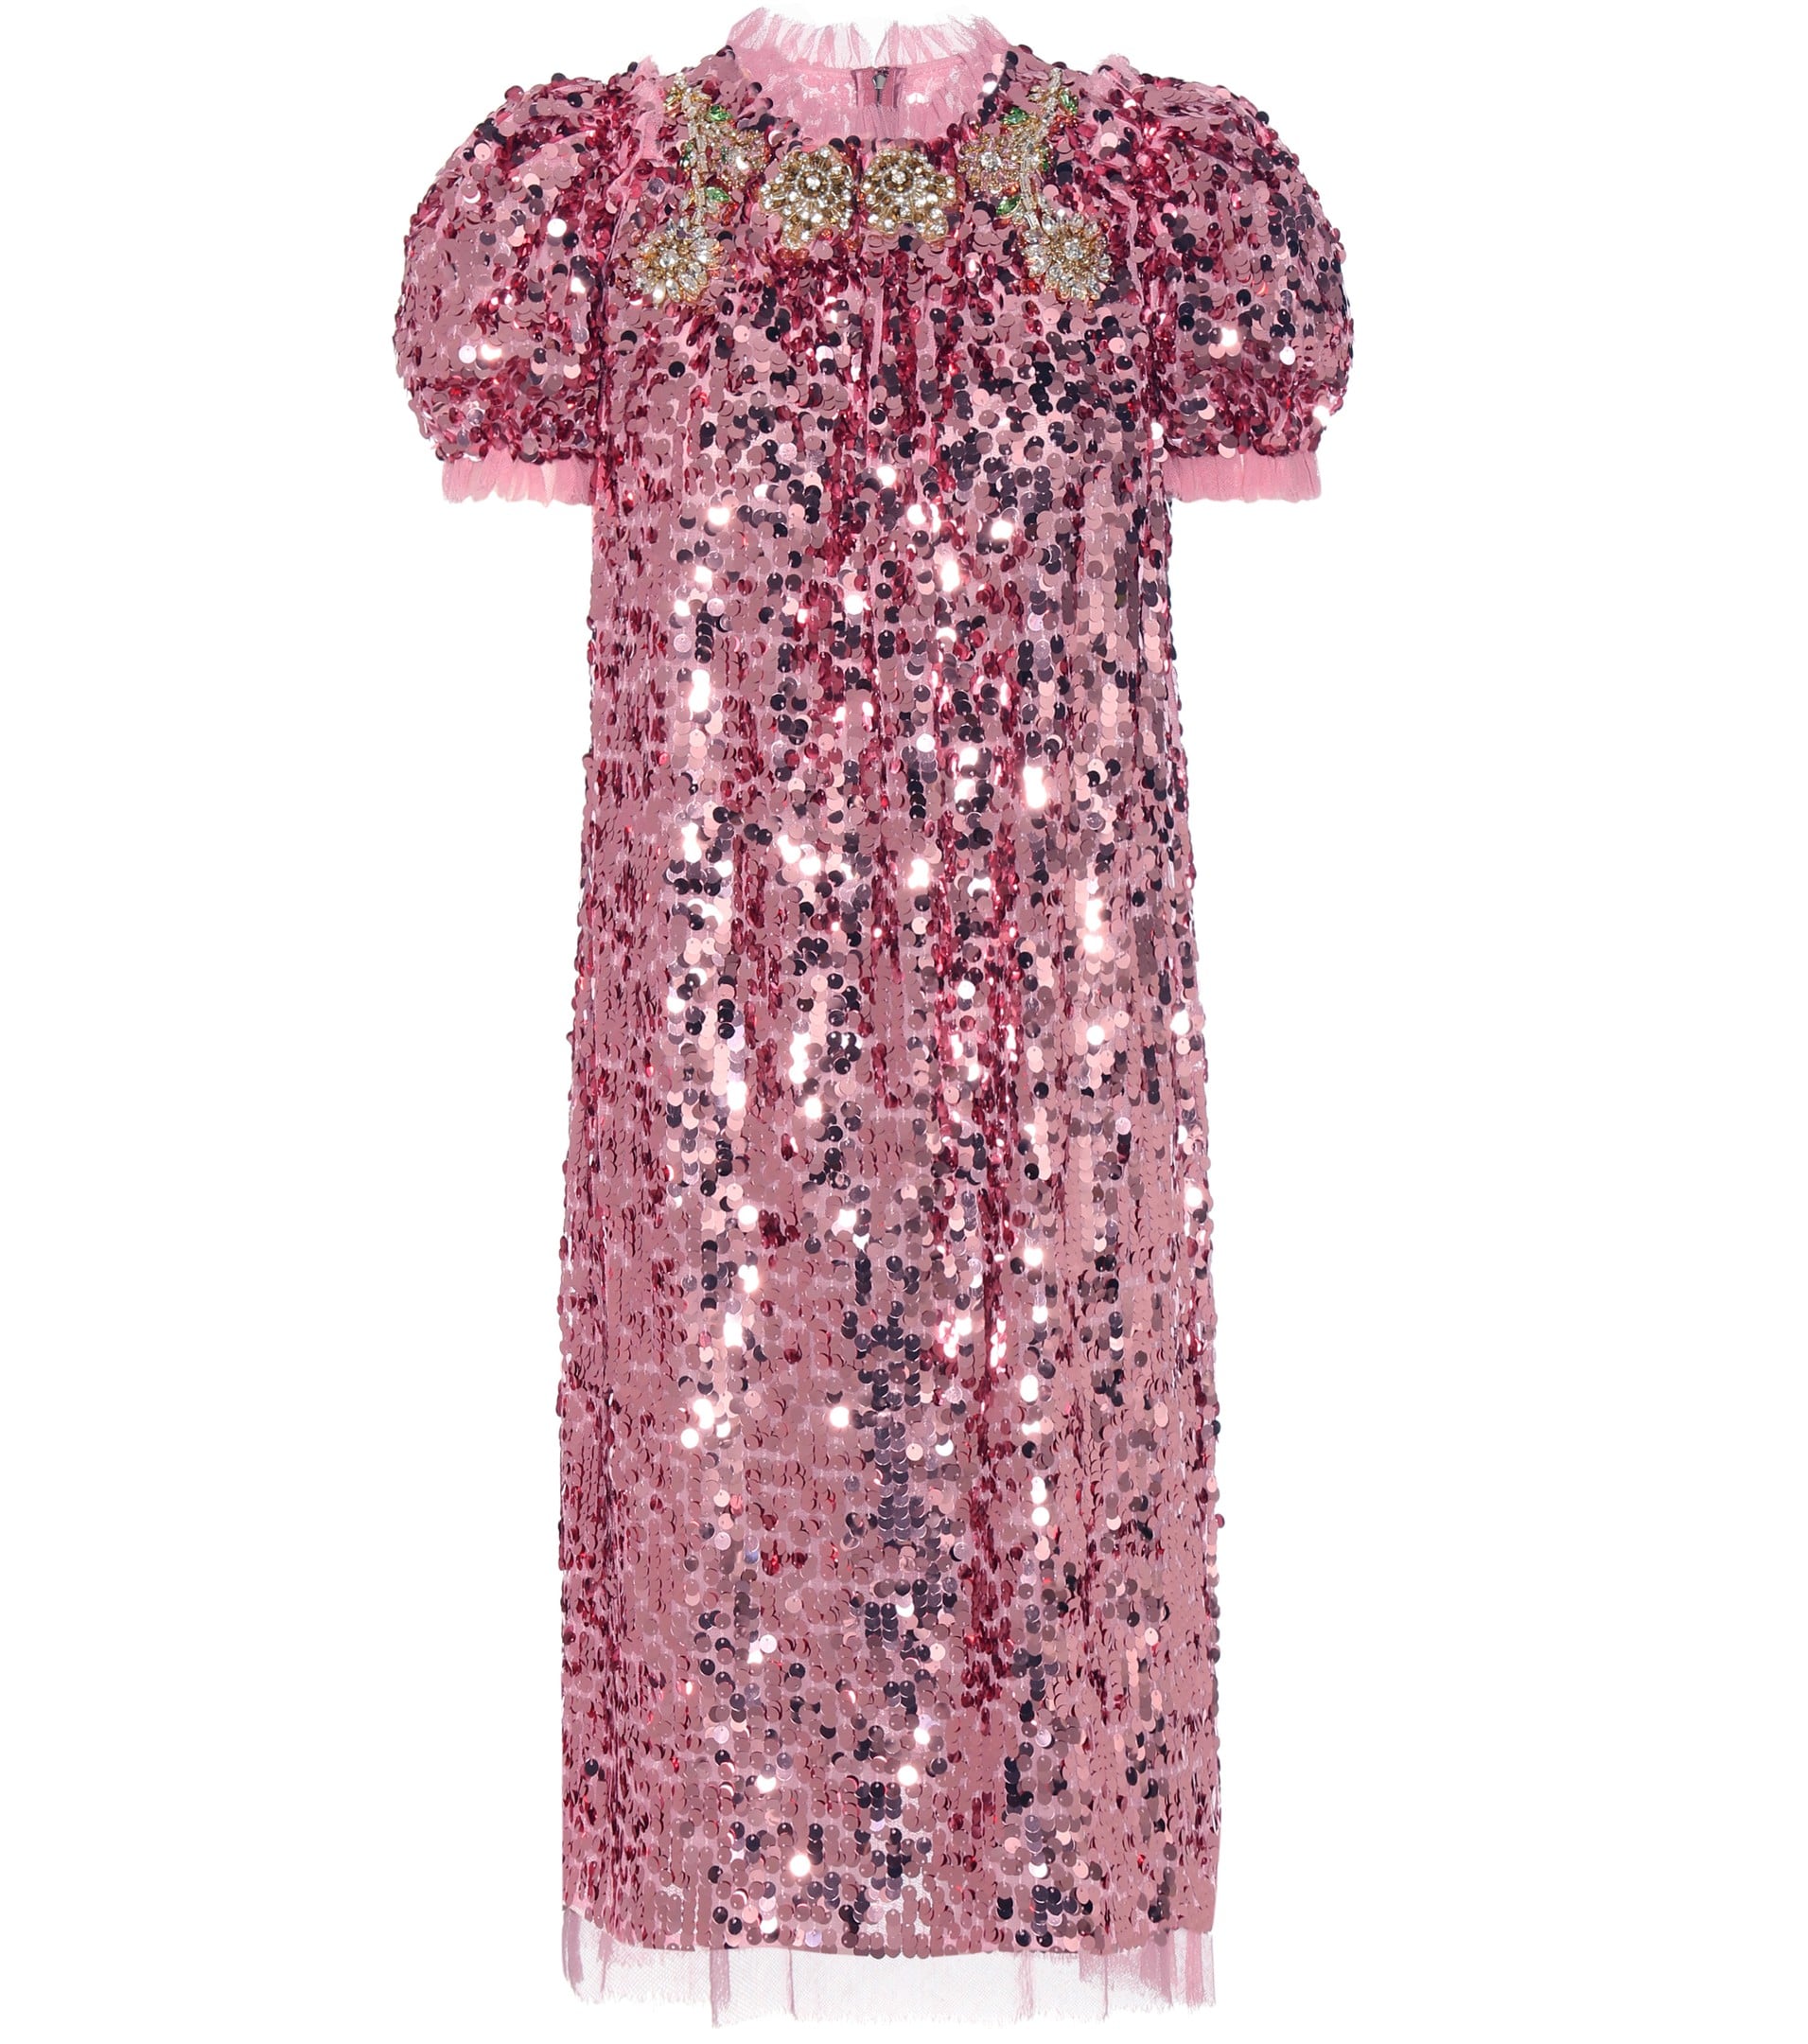 dolce and gabbana pink sequin dress